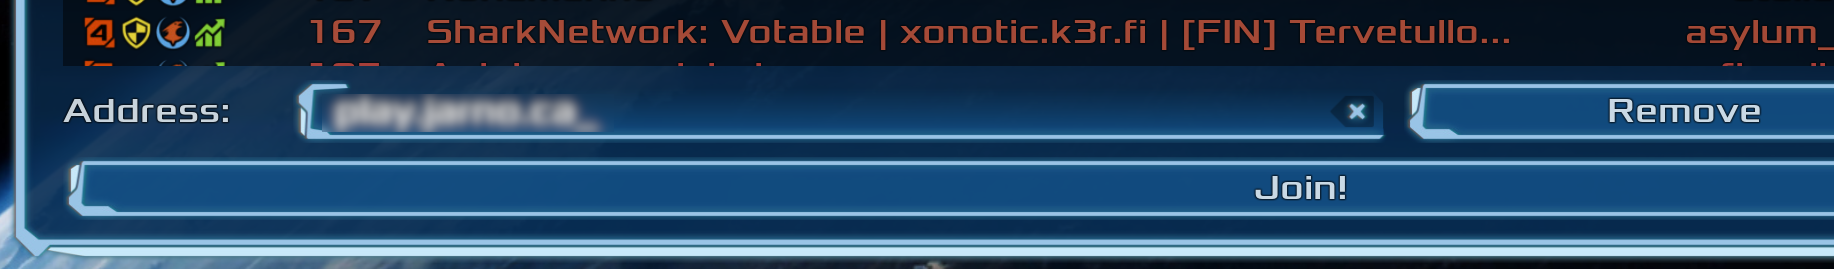 Server name input in Xonotic